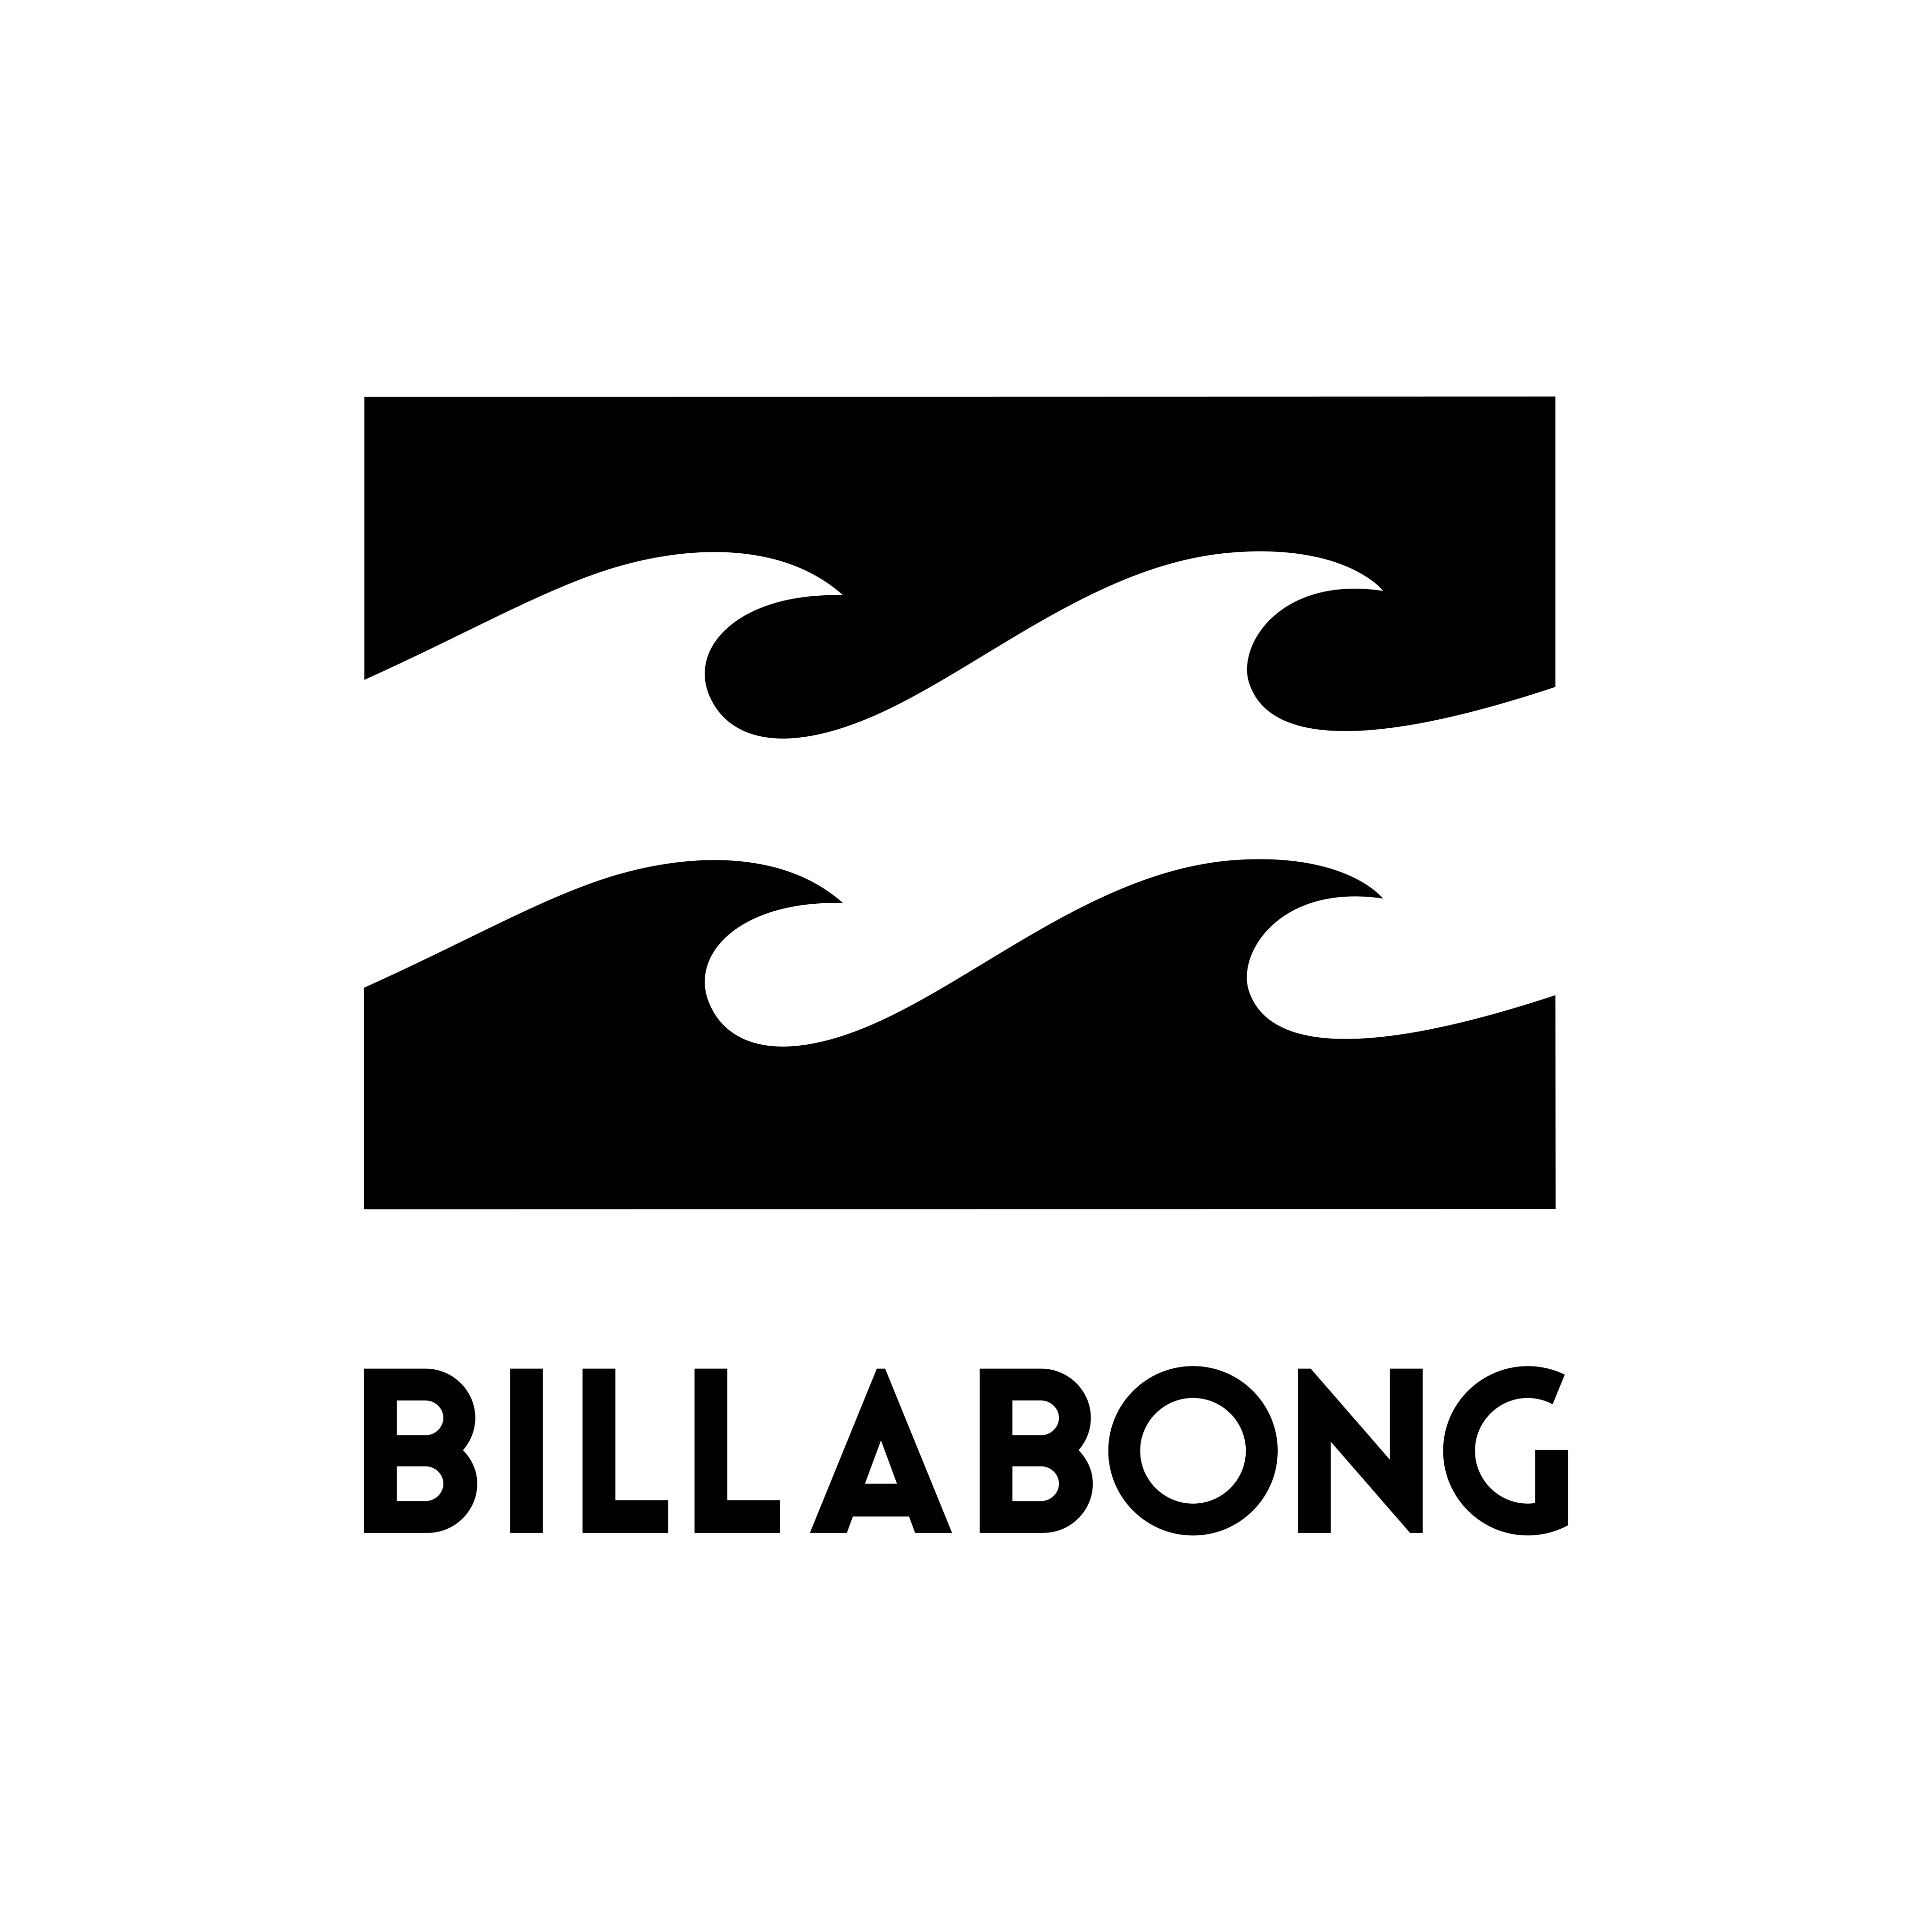 Billabong logo PNG.